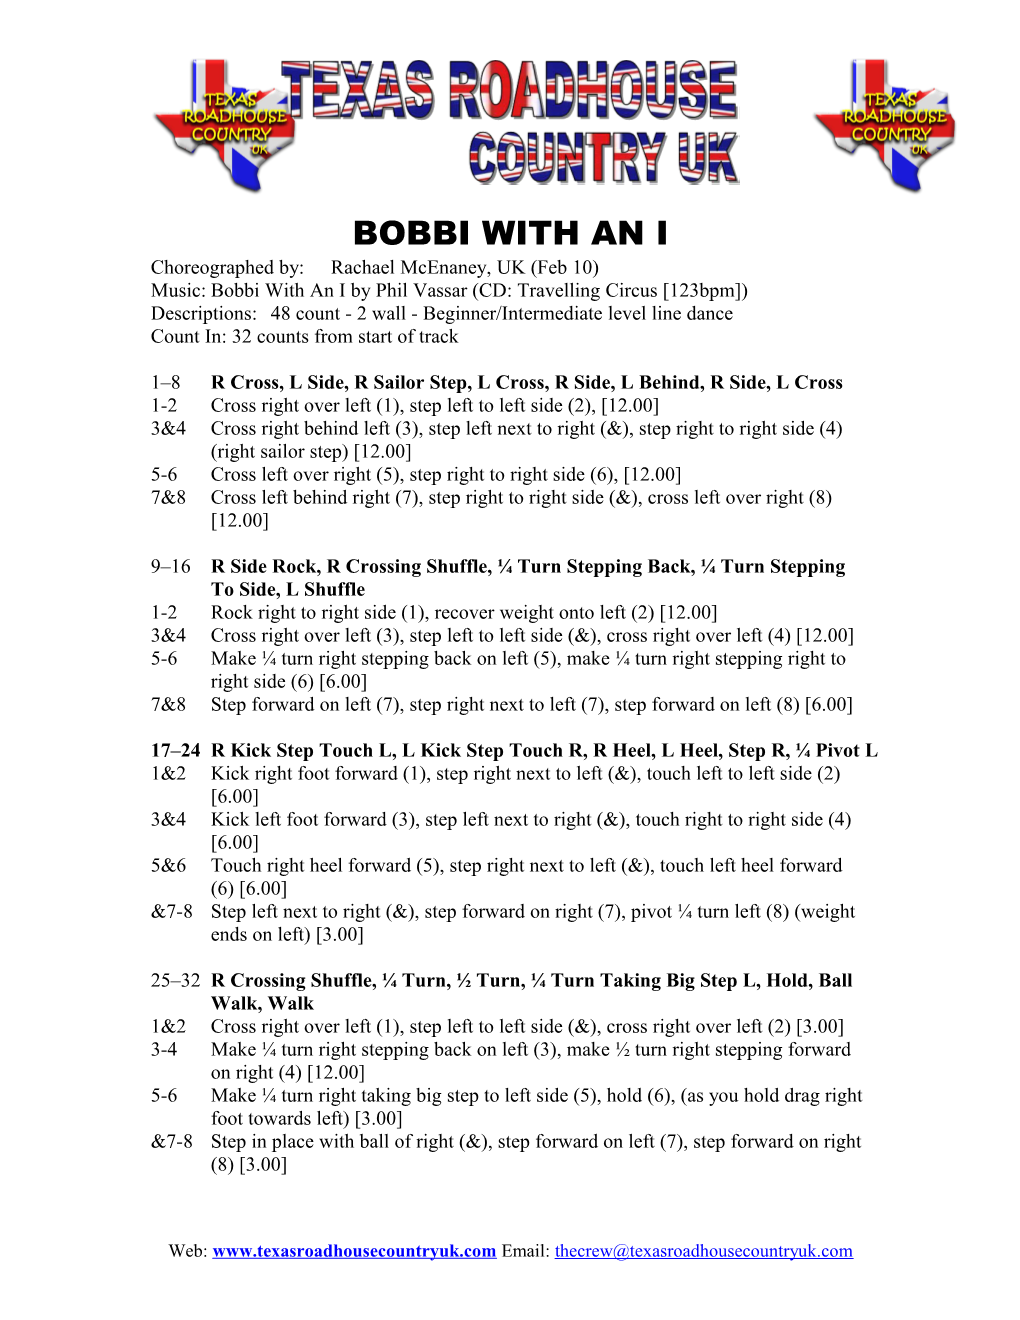 Music: Bobbi with an I by Phil Vassar (CD: Travelling Circus 123Bpm )